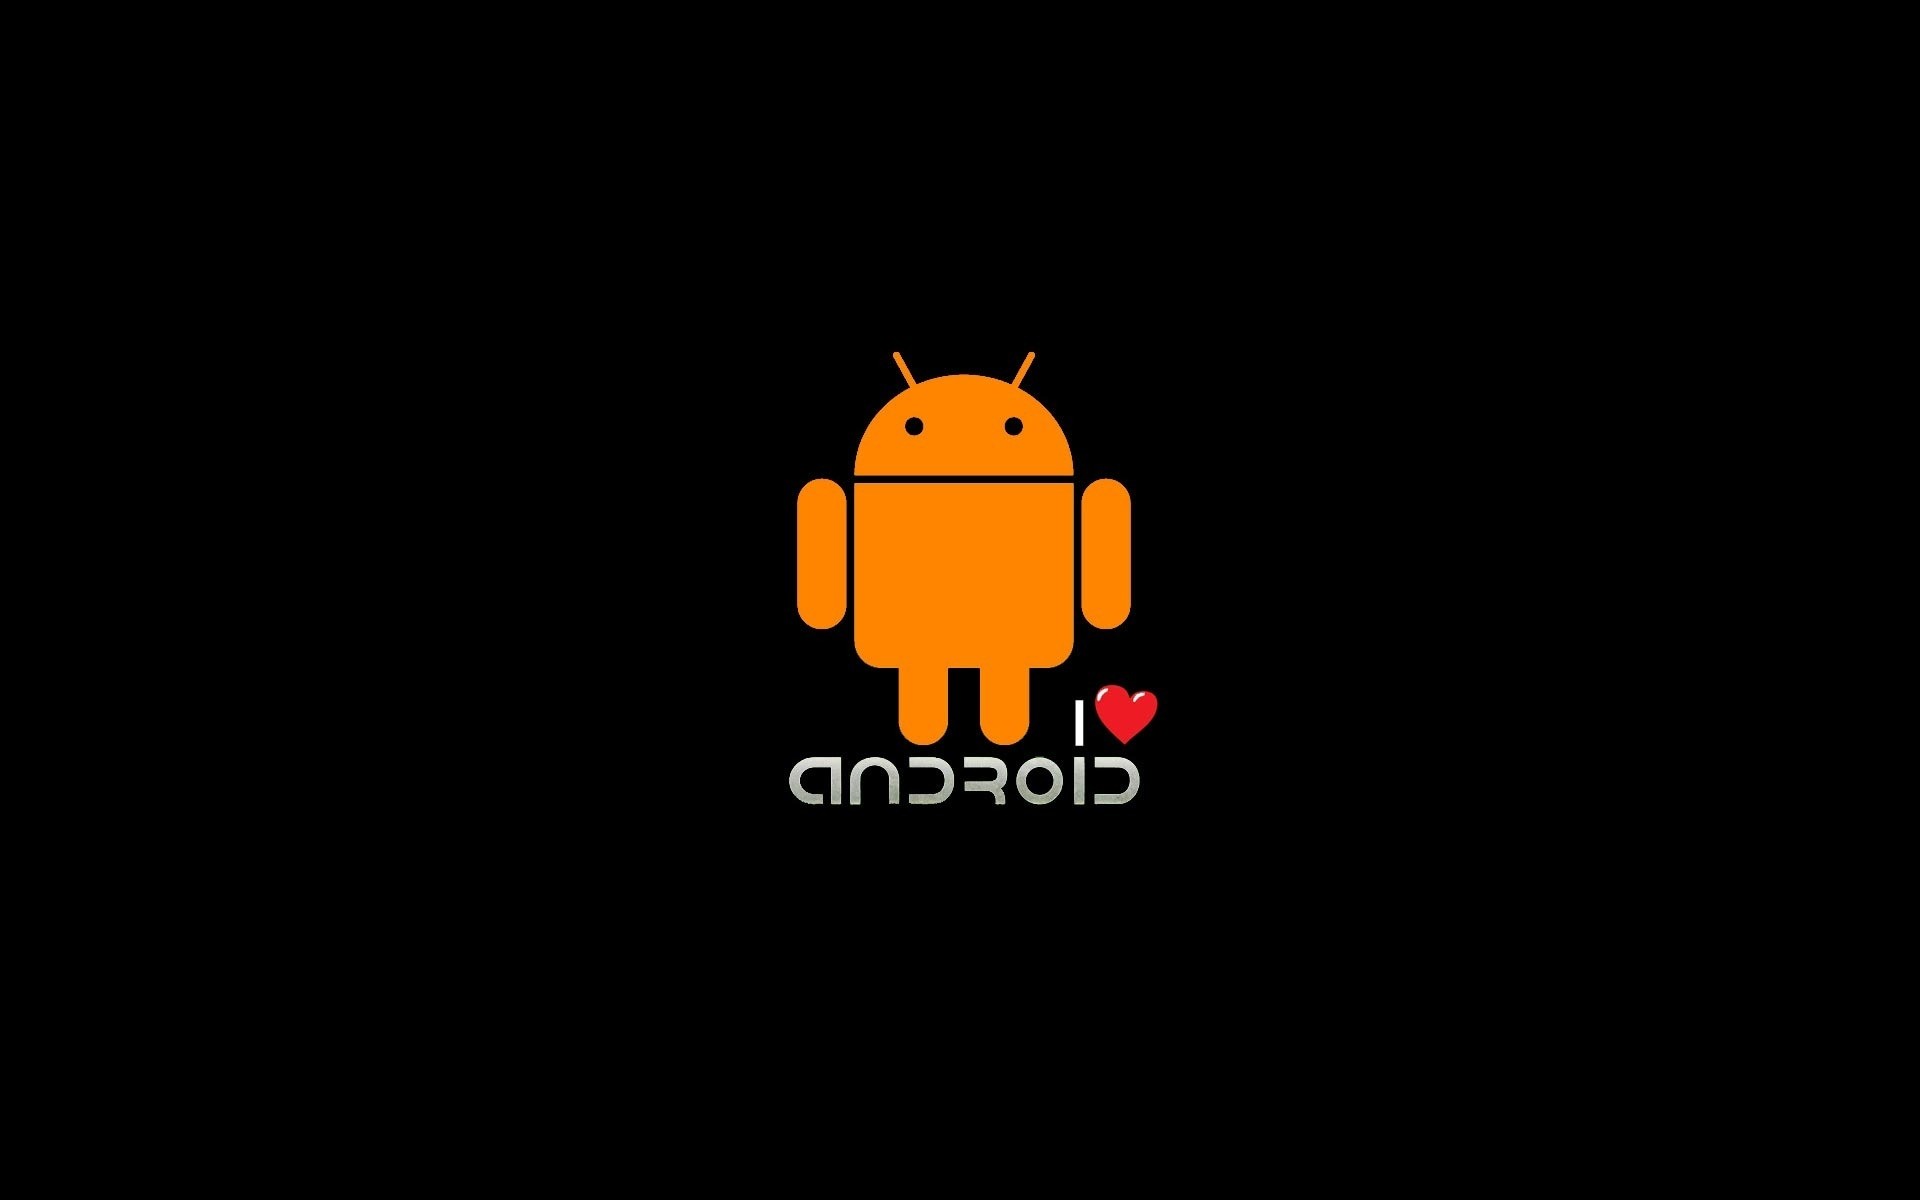 android иллюстрация фон логотип android любовь сердце техник гаджет